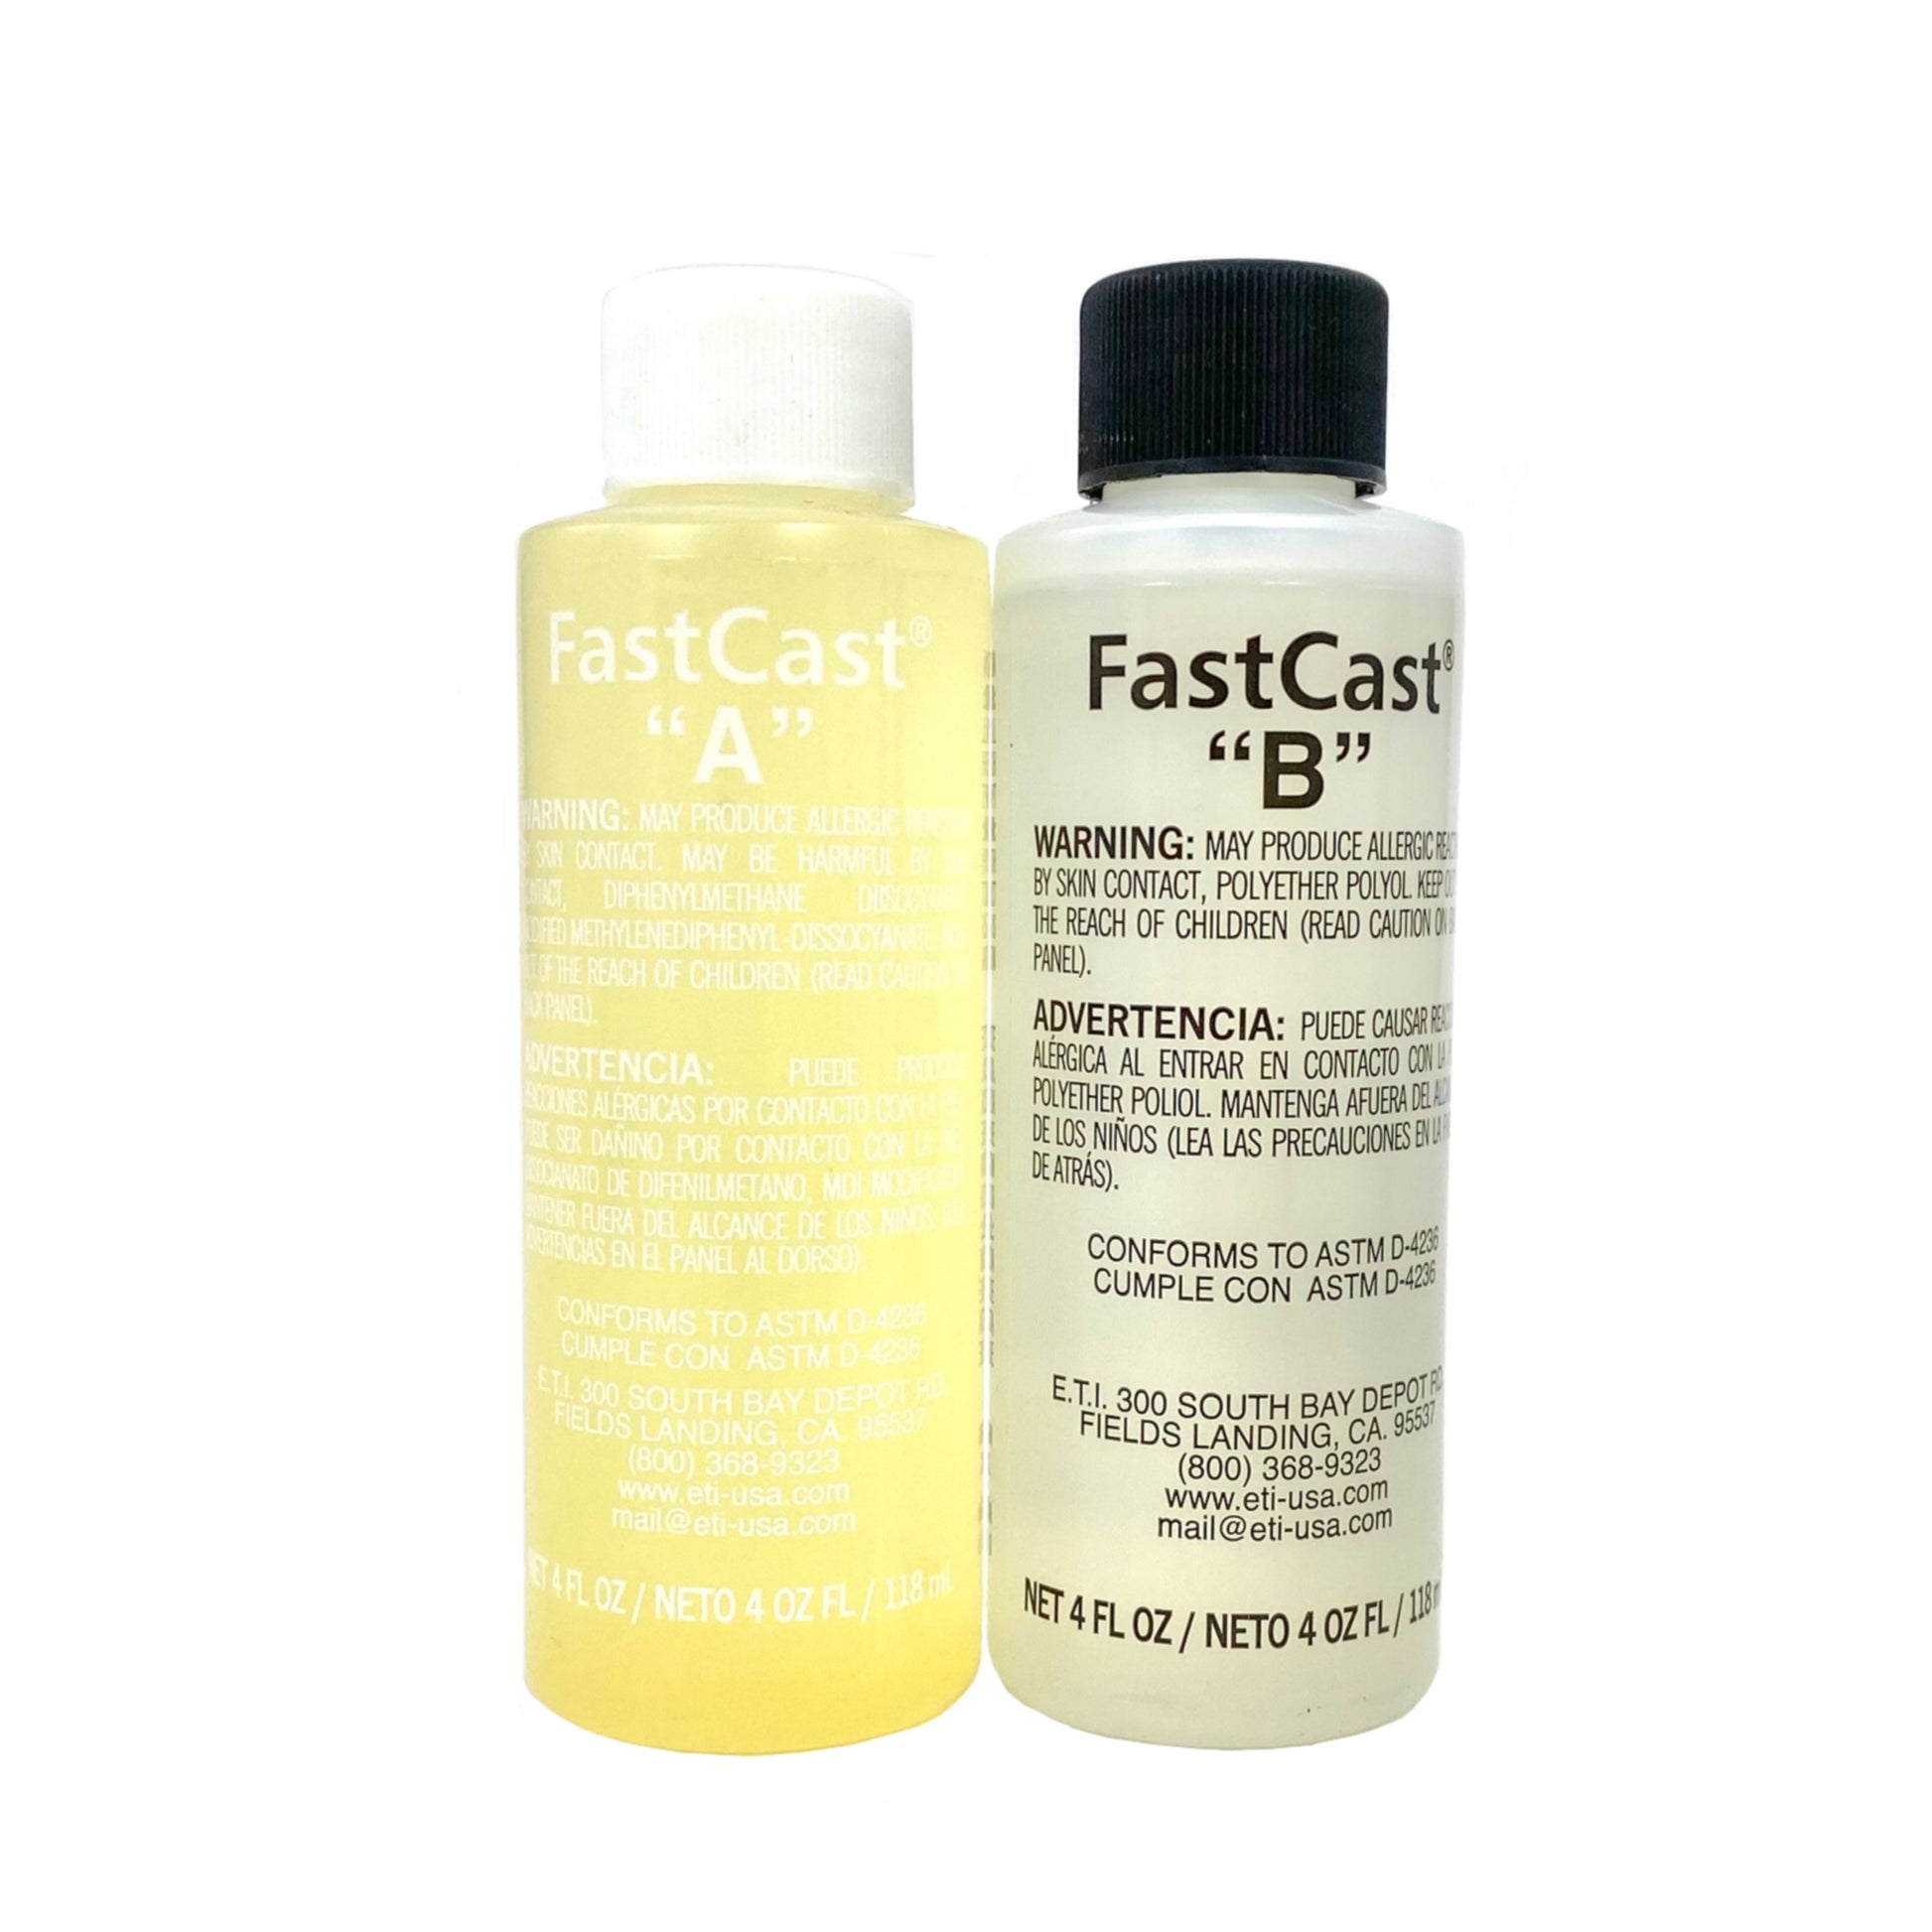 FastCast Urethane Casting Resin - by Castin’ Craft - K. A. Artist Shop